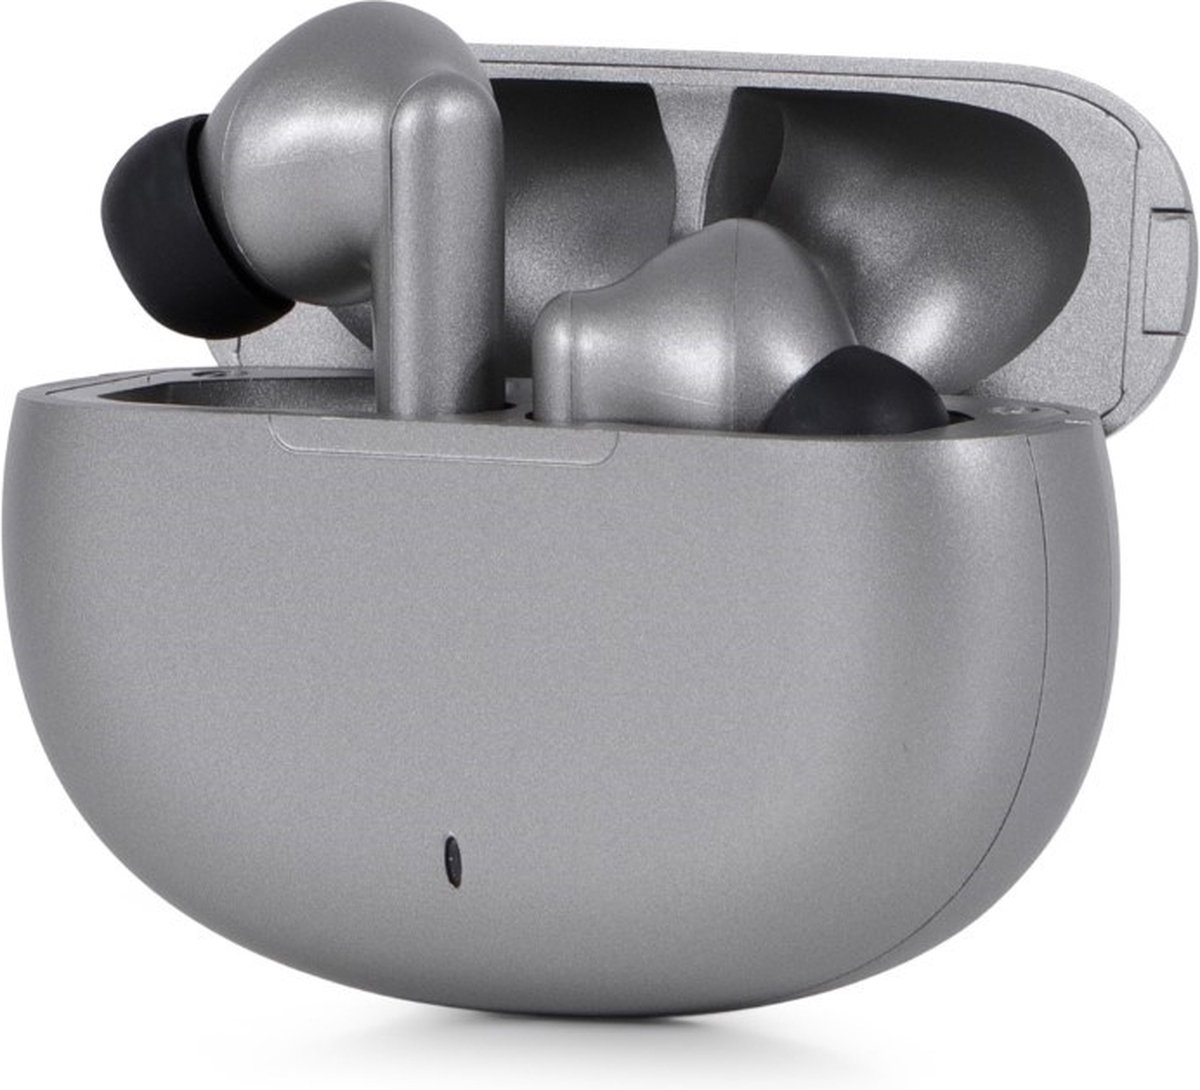 BRAINZ Draadloze oordopjes - In-Earbuds - Noice cancelling - Bluetooth headset - Metallic zilver